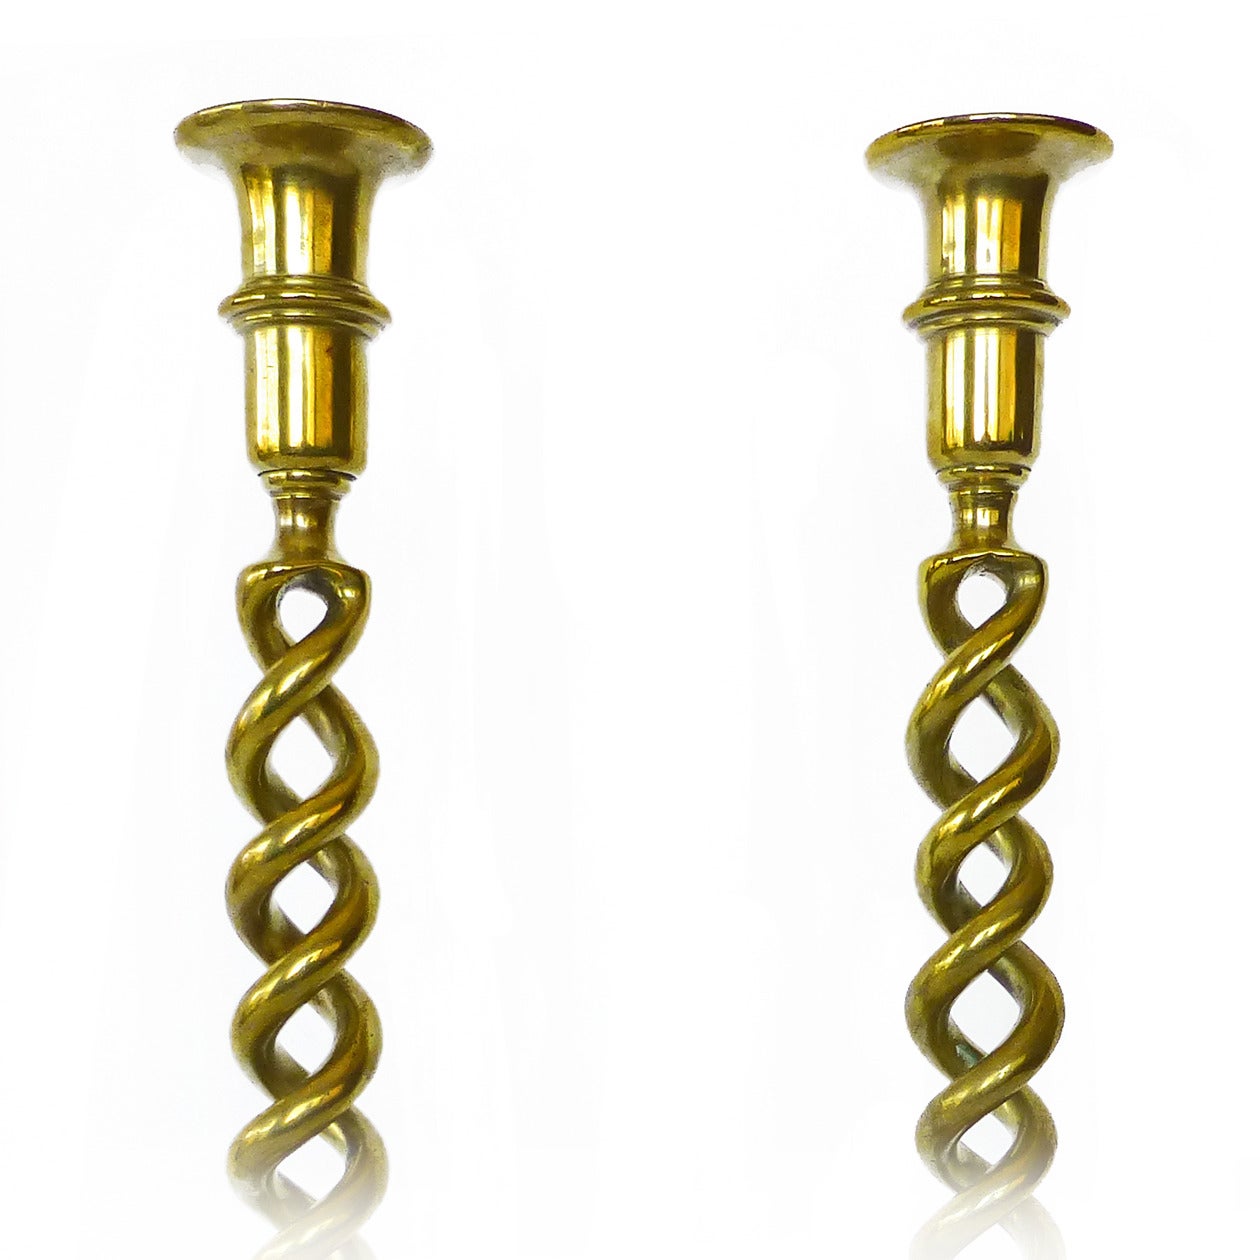 Pair of English Victorian Brass Double Twist Candlesticks Circa 1875

Height 15 1/2″, Base Diameter 5 1/2″